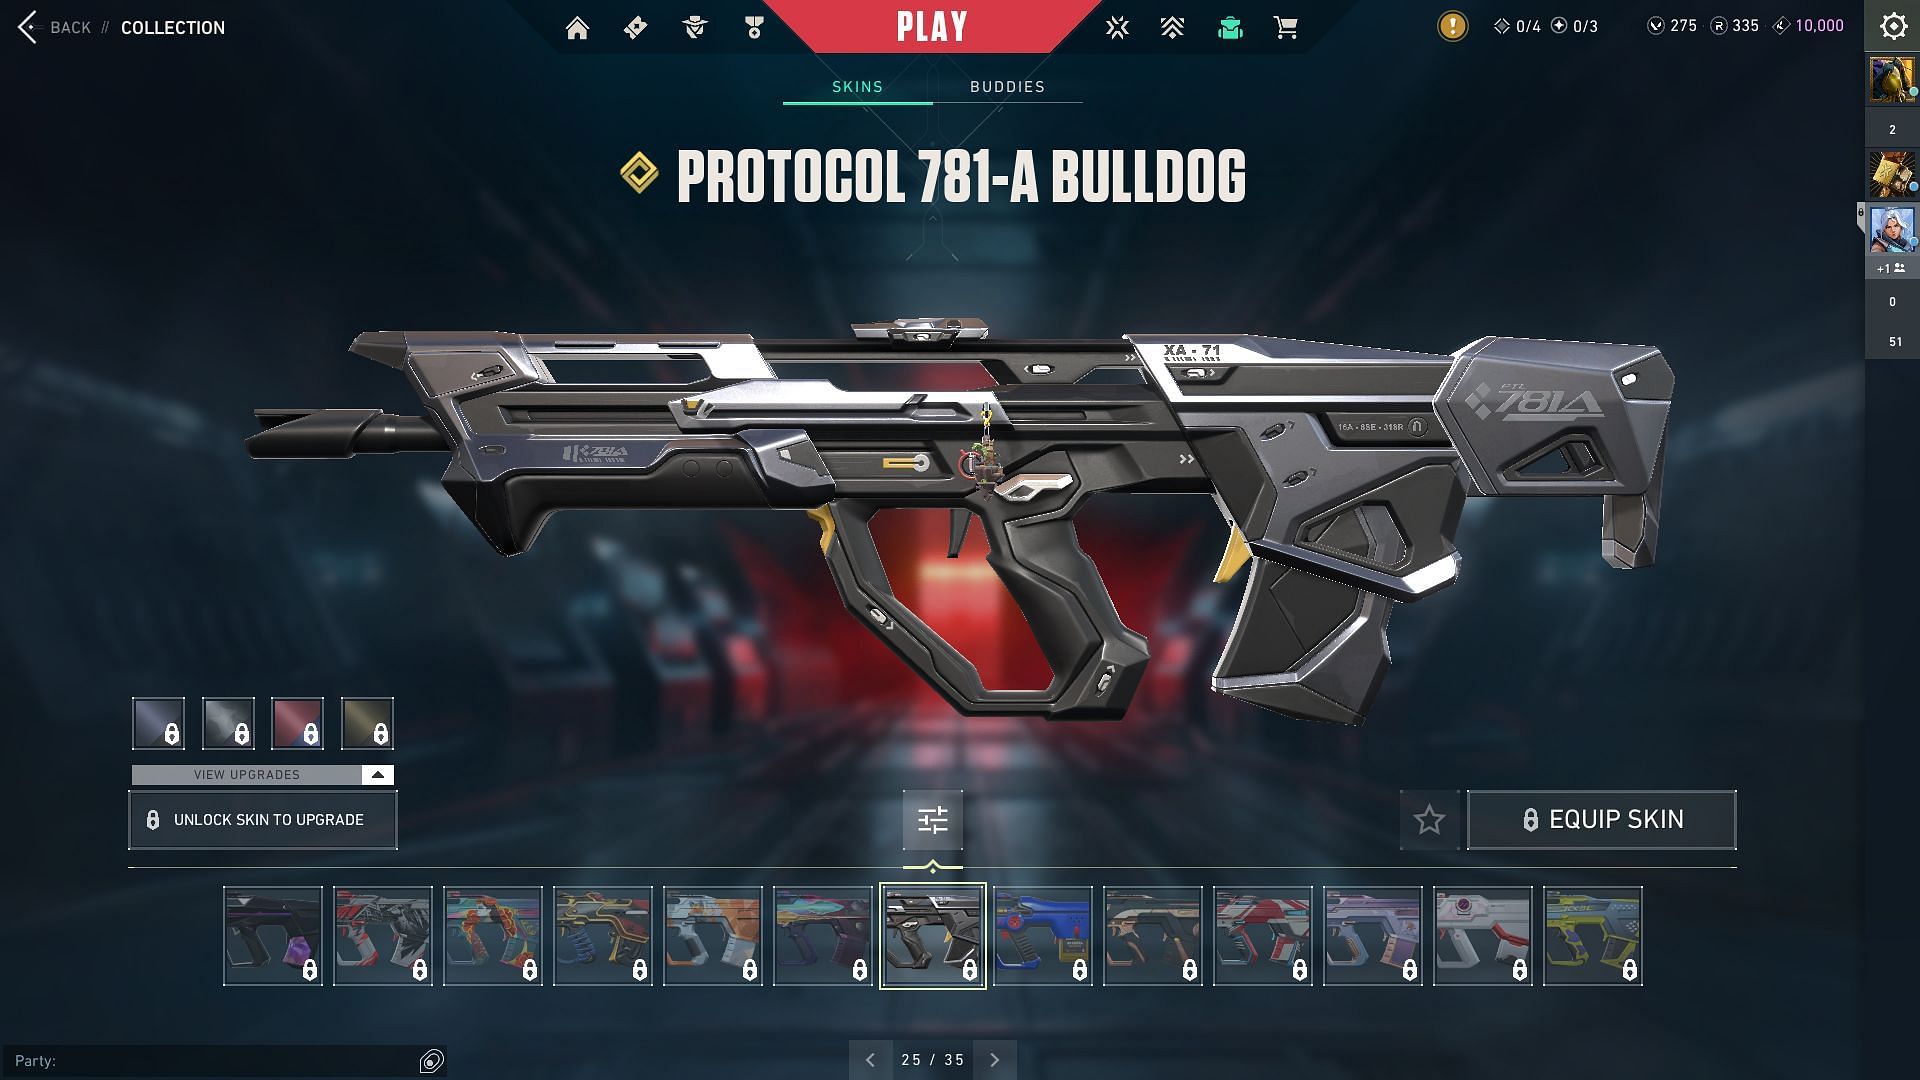 Protocol 781-A Bulldog (Image via Sportskeeda and Riot Games)